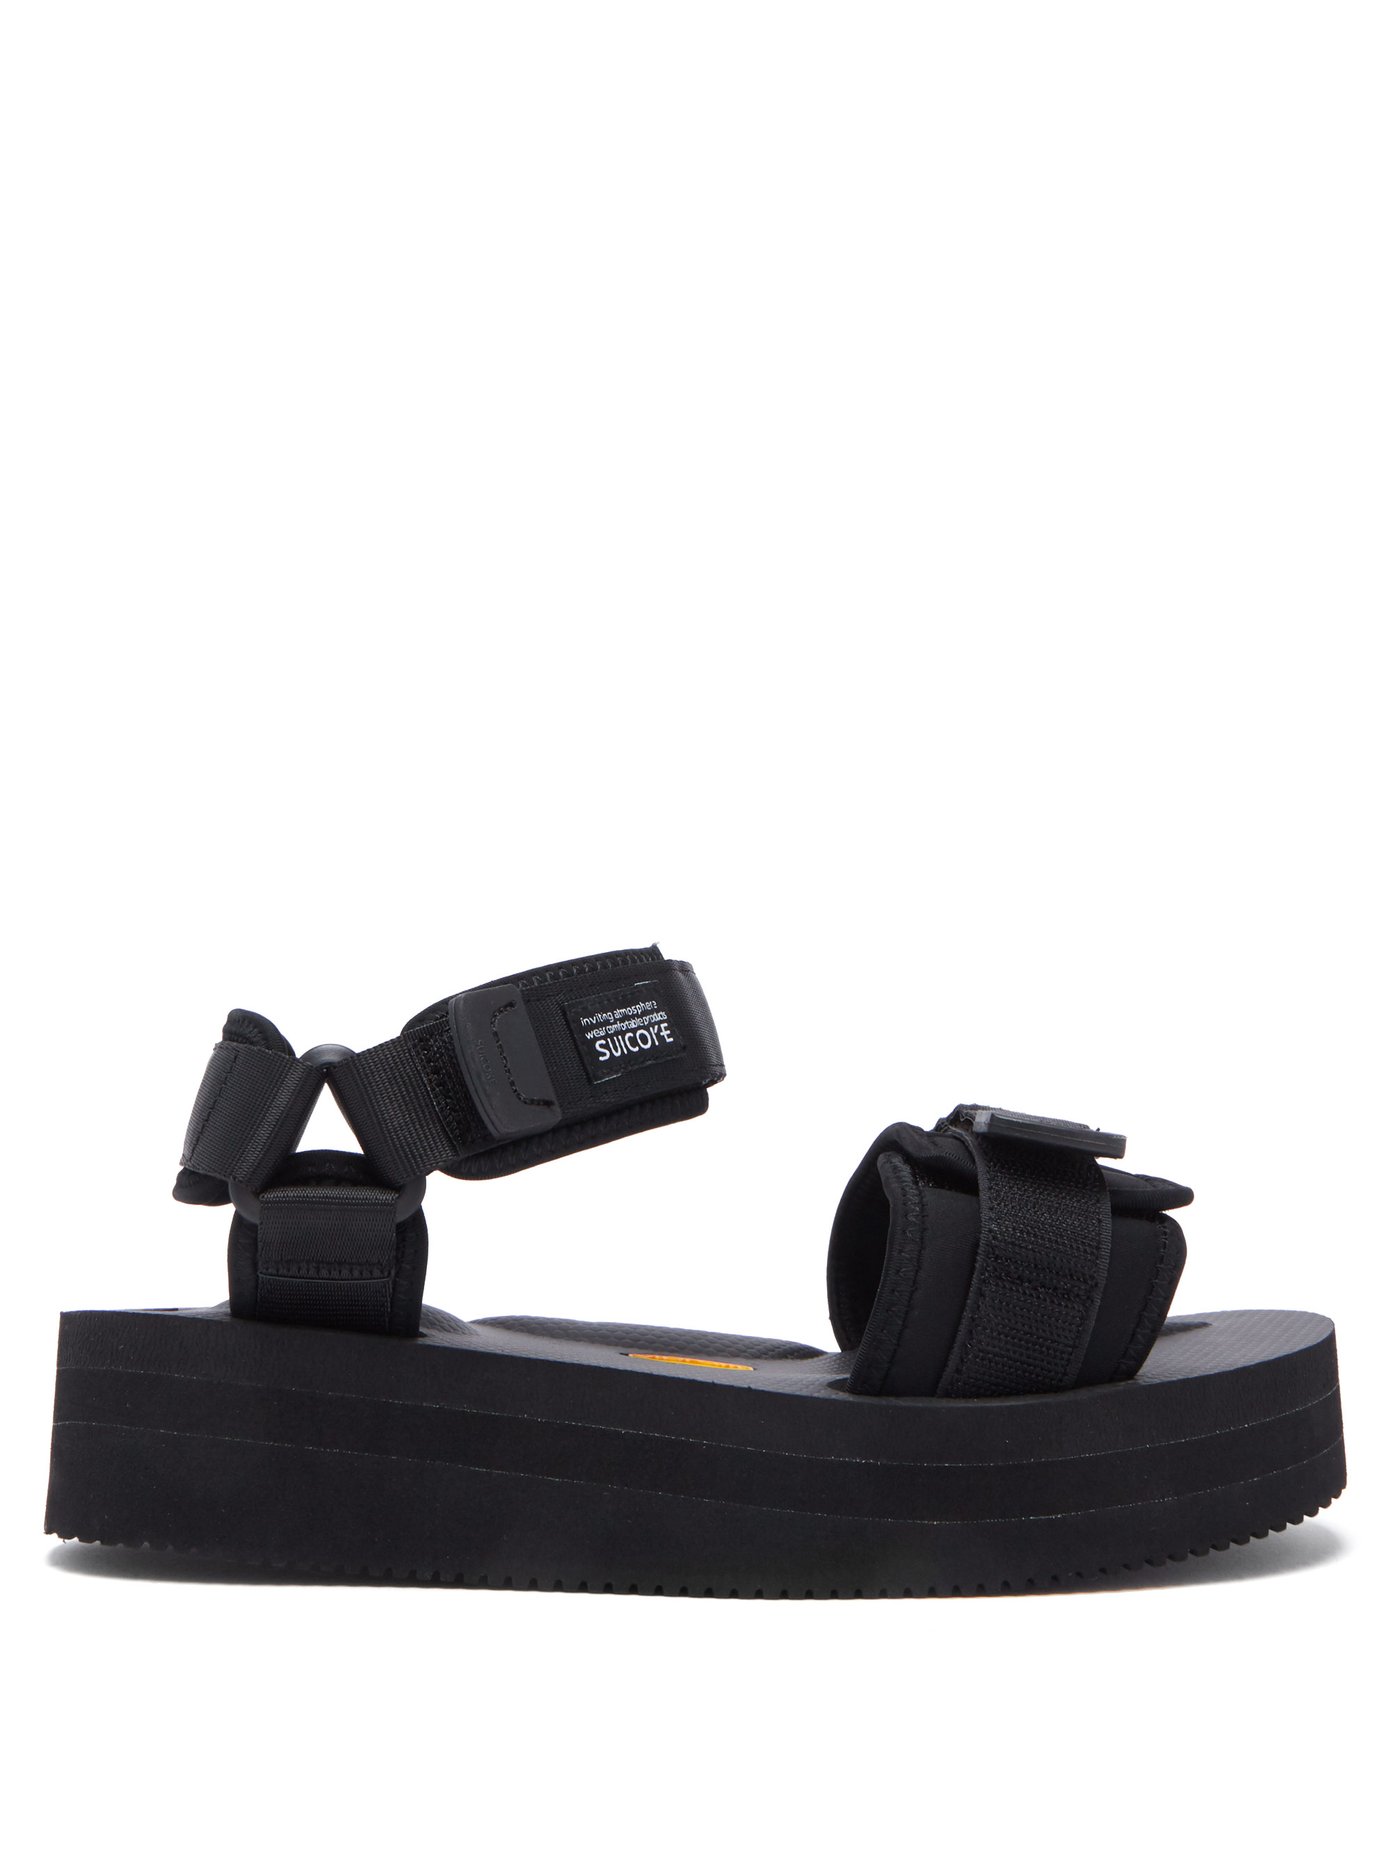 Cel-VPO velcro-strap sandals | Suicoke 